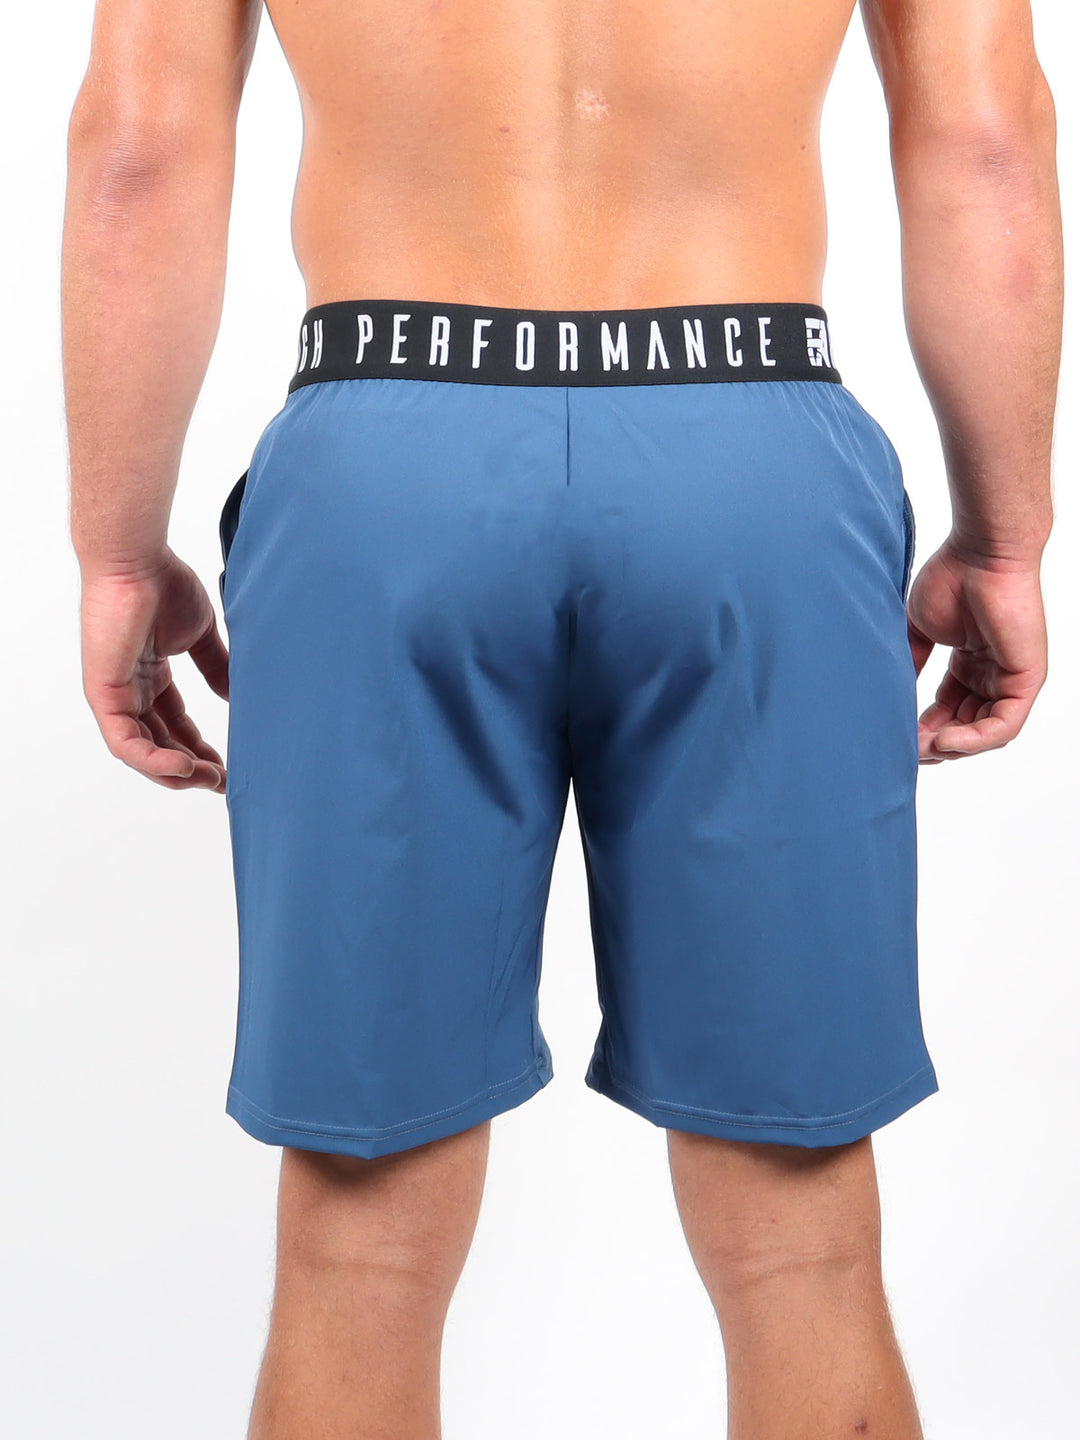 FA - High Performance - Activity Shorts - Ocean Blue